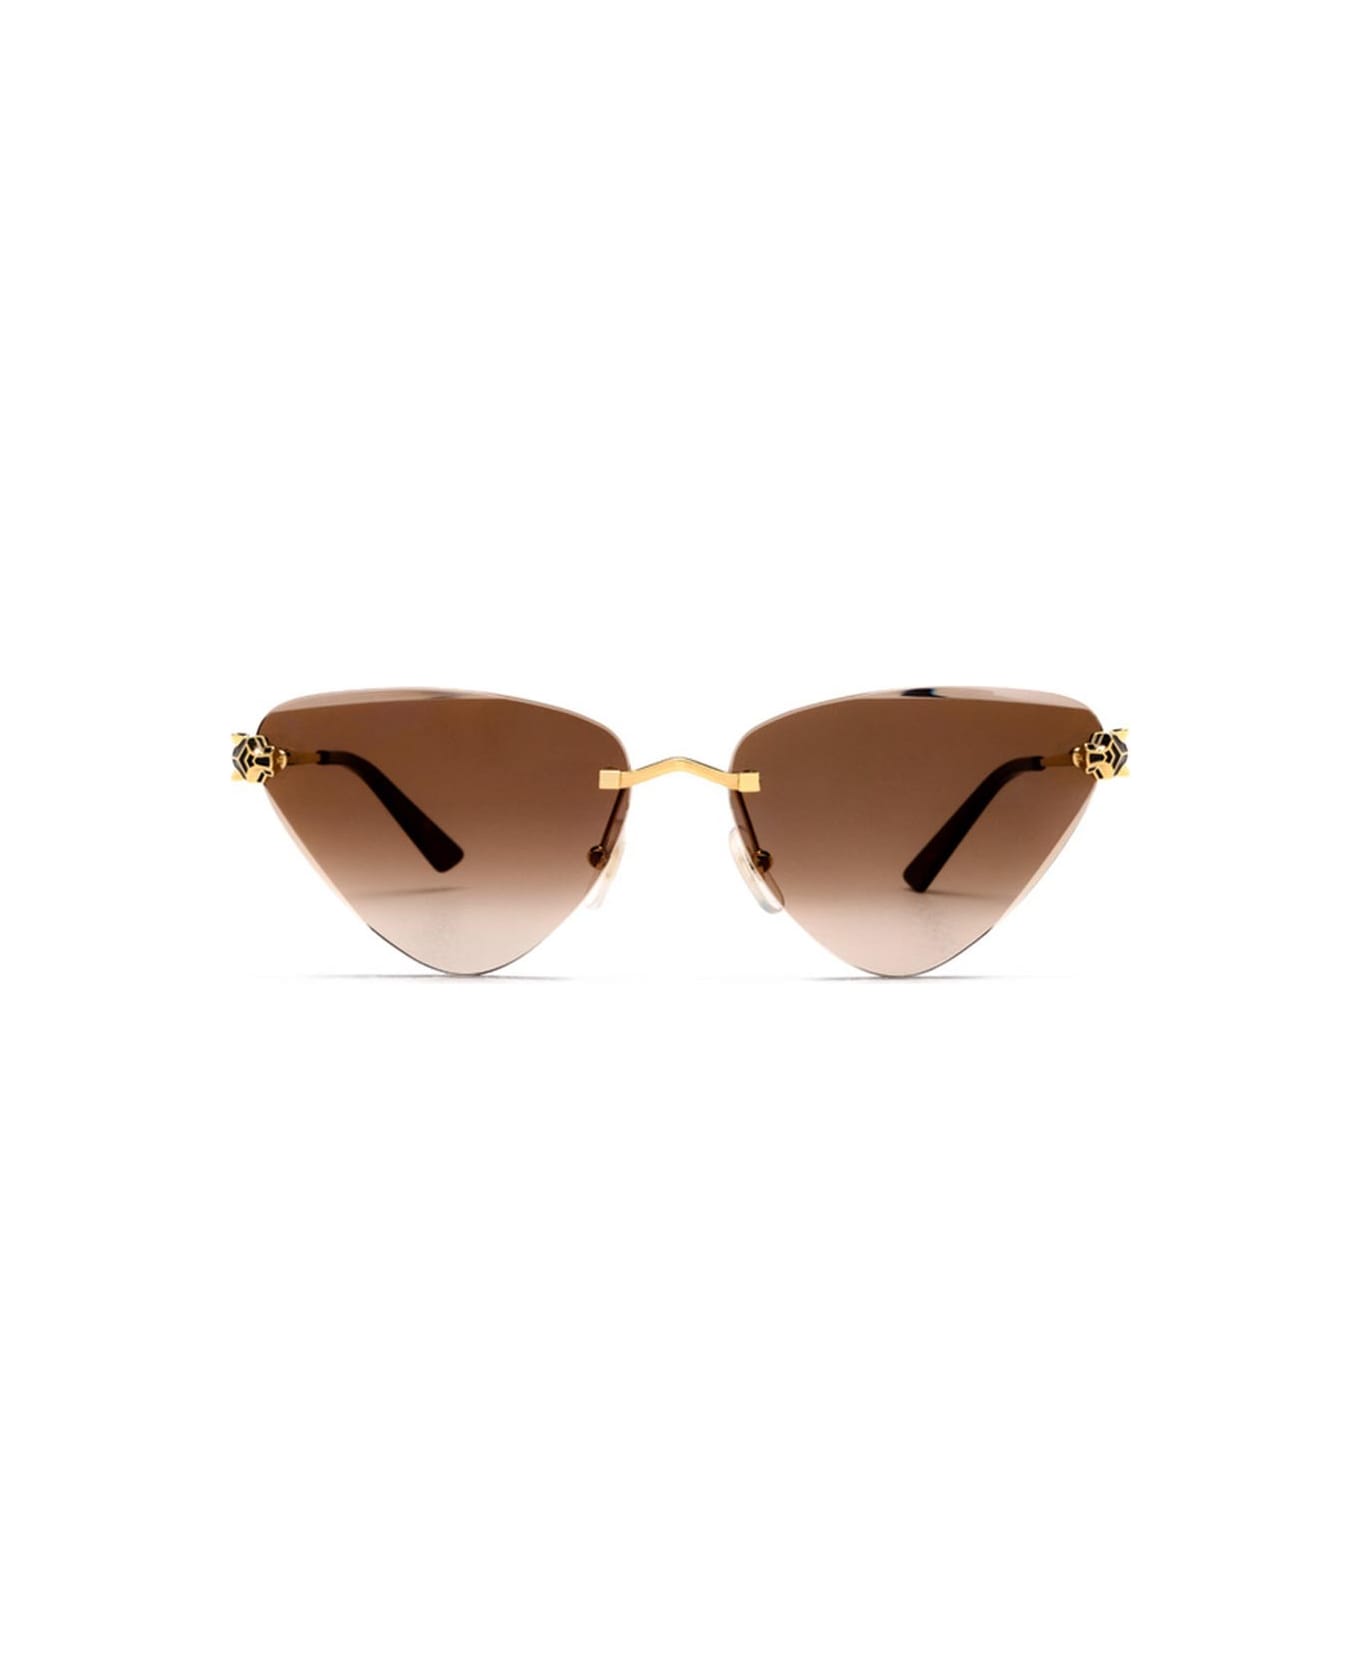 Cartier Eyewear Sunglasses - Oro/Marrone サングラス